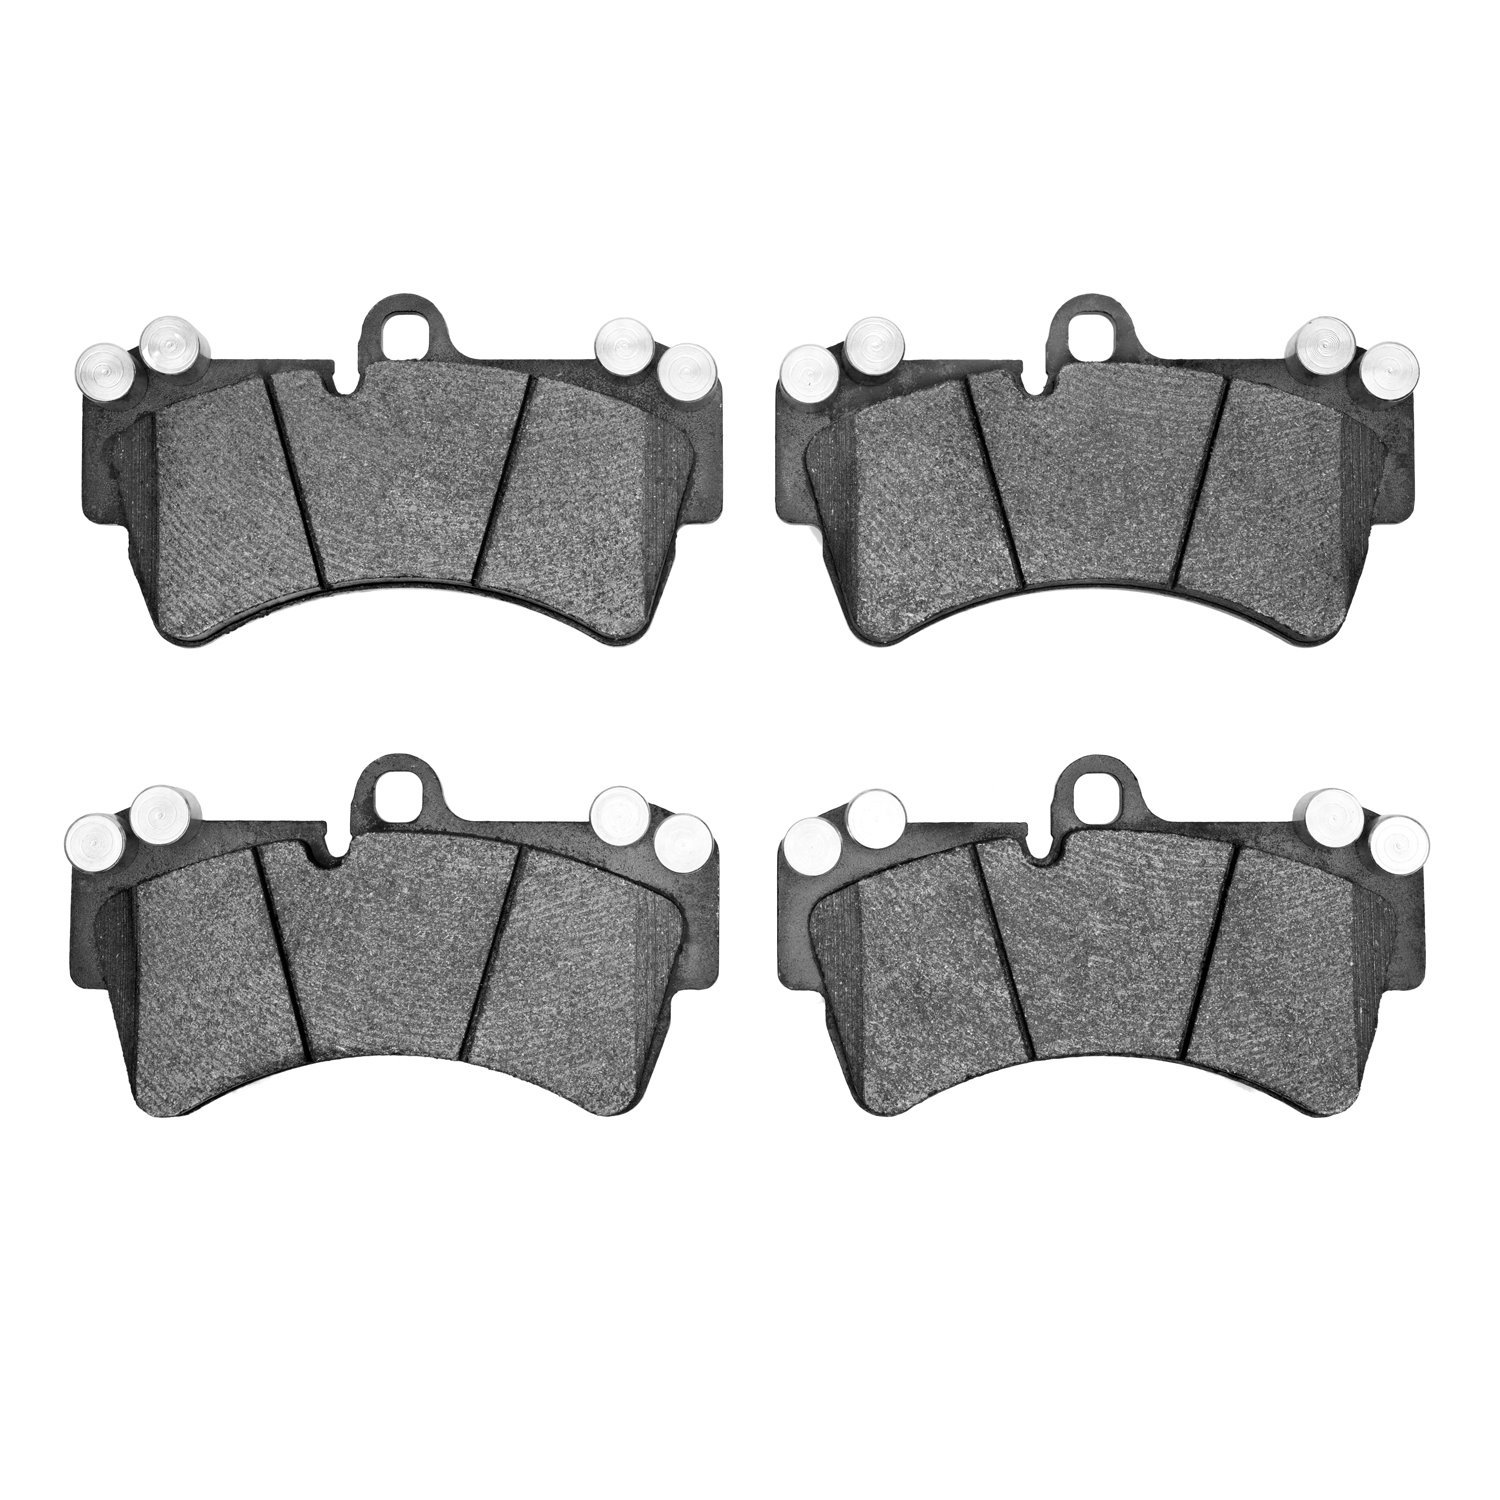 1600-0977-00 5000 Euro Ceramic Brake Pads, 2003-2015 Multiple Makes/Models, Position: Front